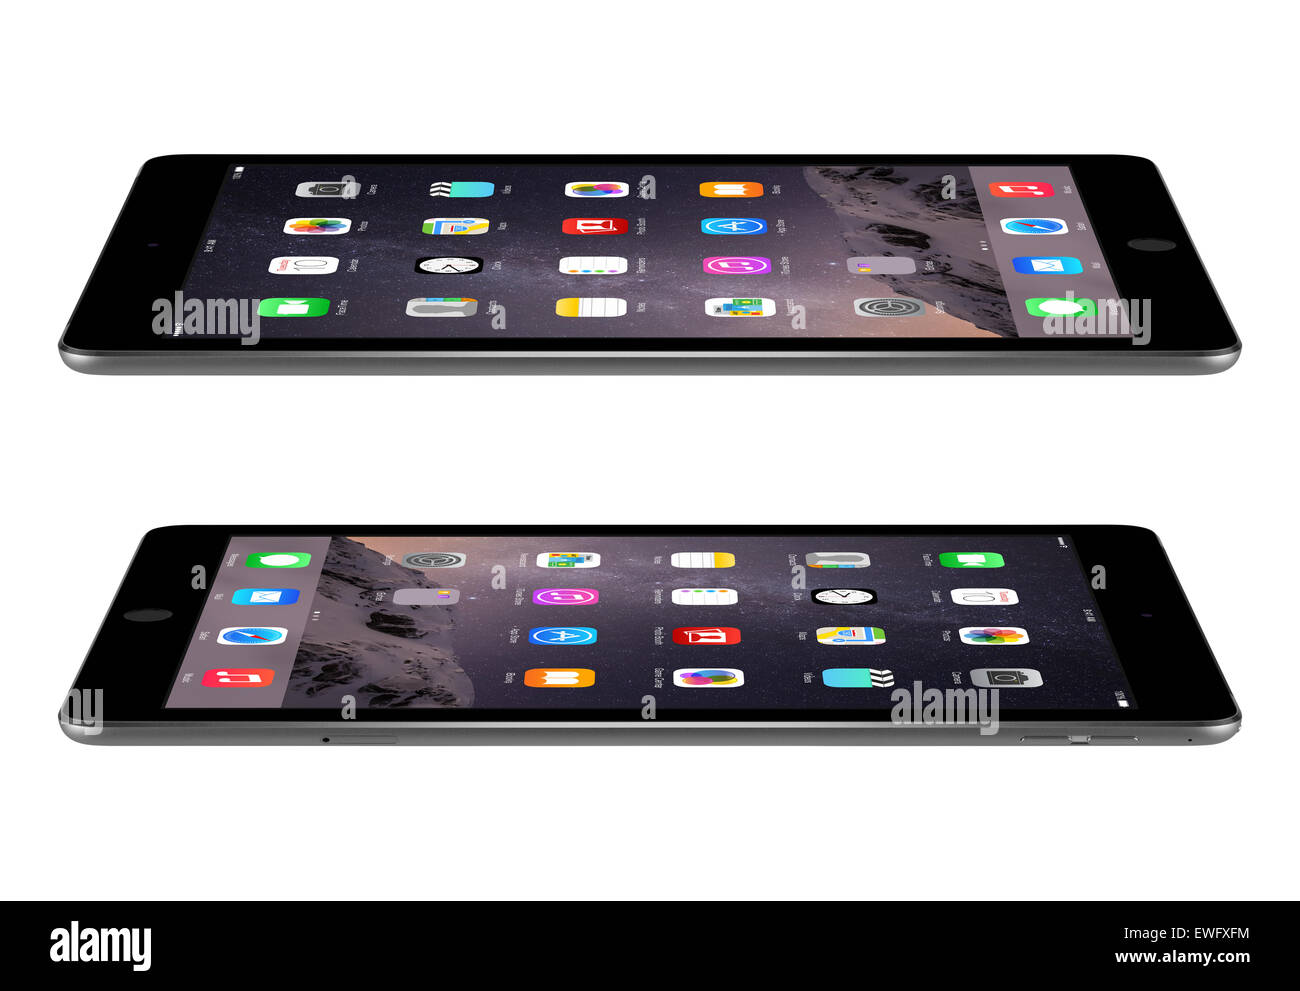 Varna, Bulgarien - 3. Februar 2014: Space Grau Apple iPad Air 2 mit Touch ID Anzeige iOS 8 Homescreen liegt auf der Oberfläche. Stockfoto